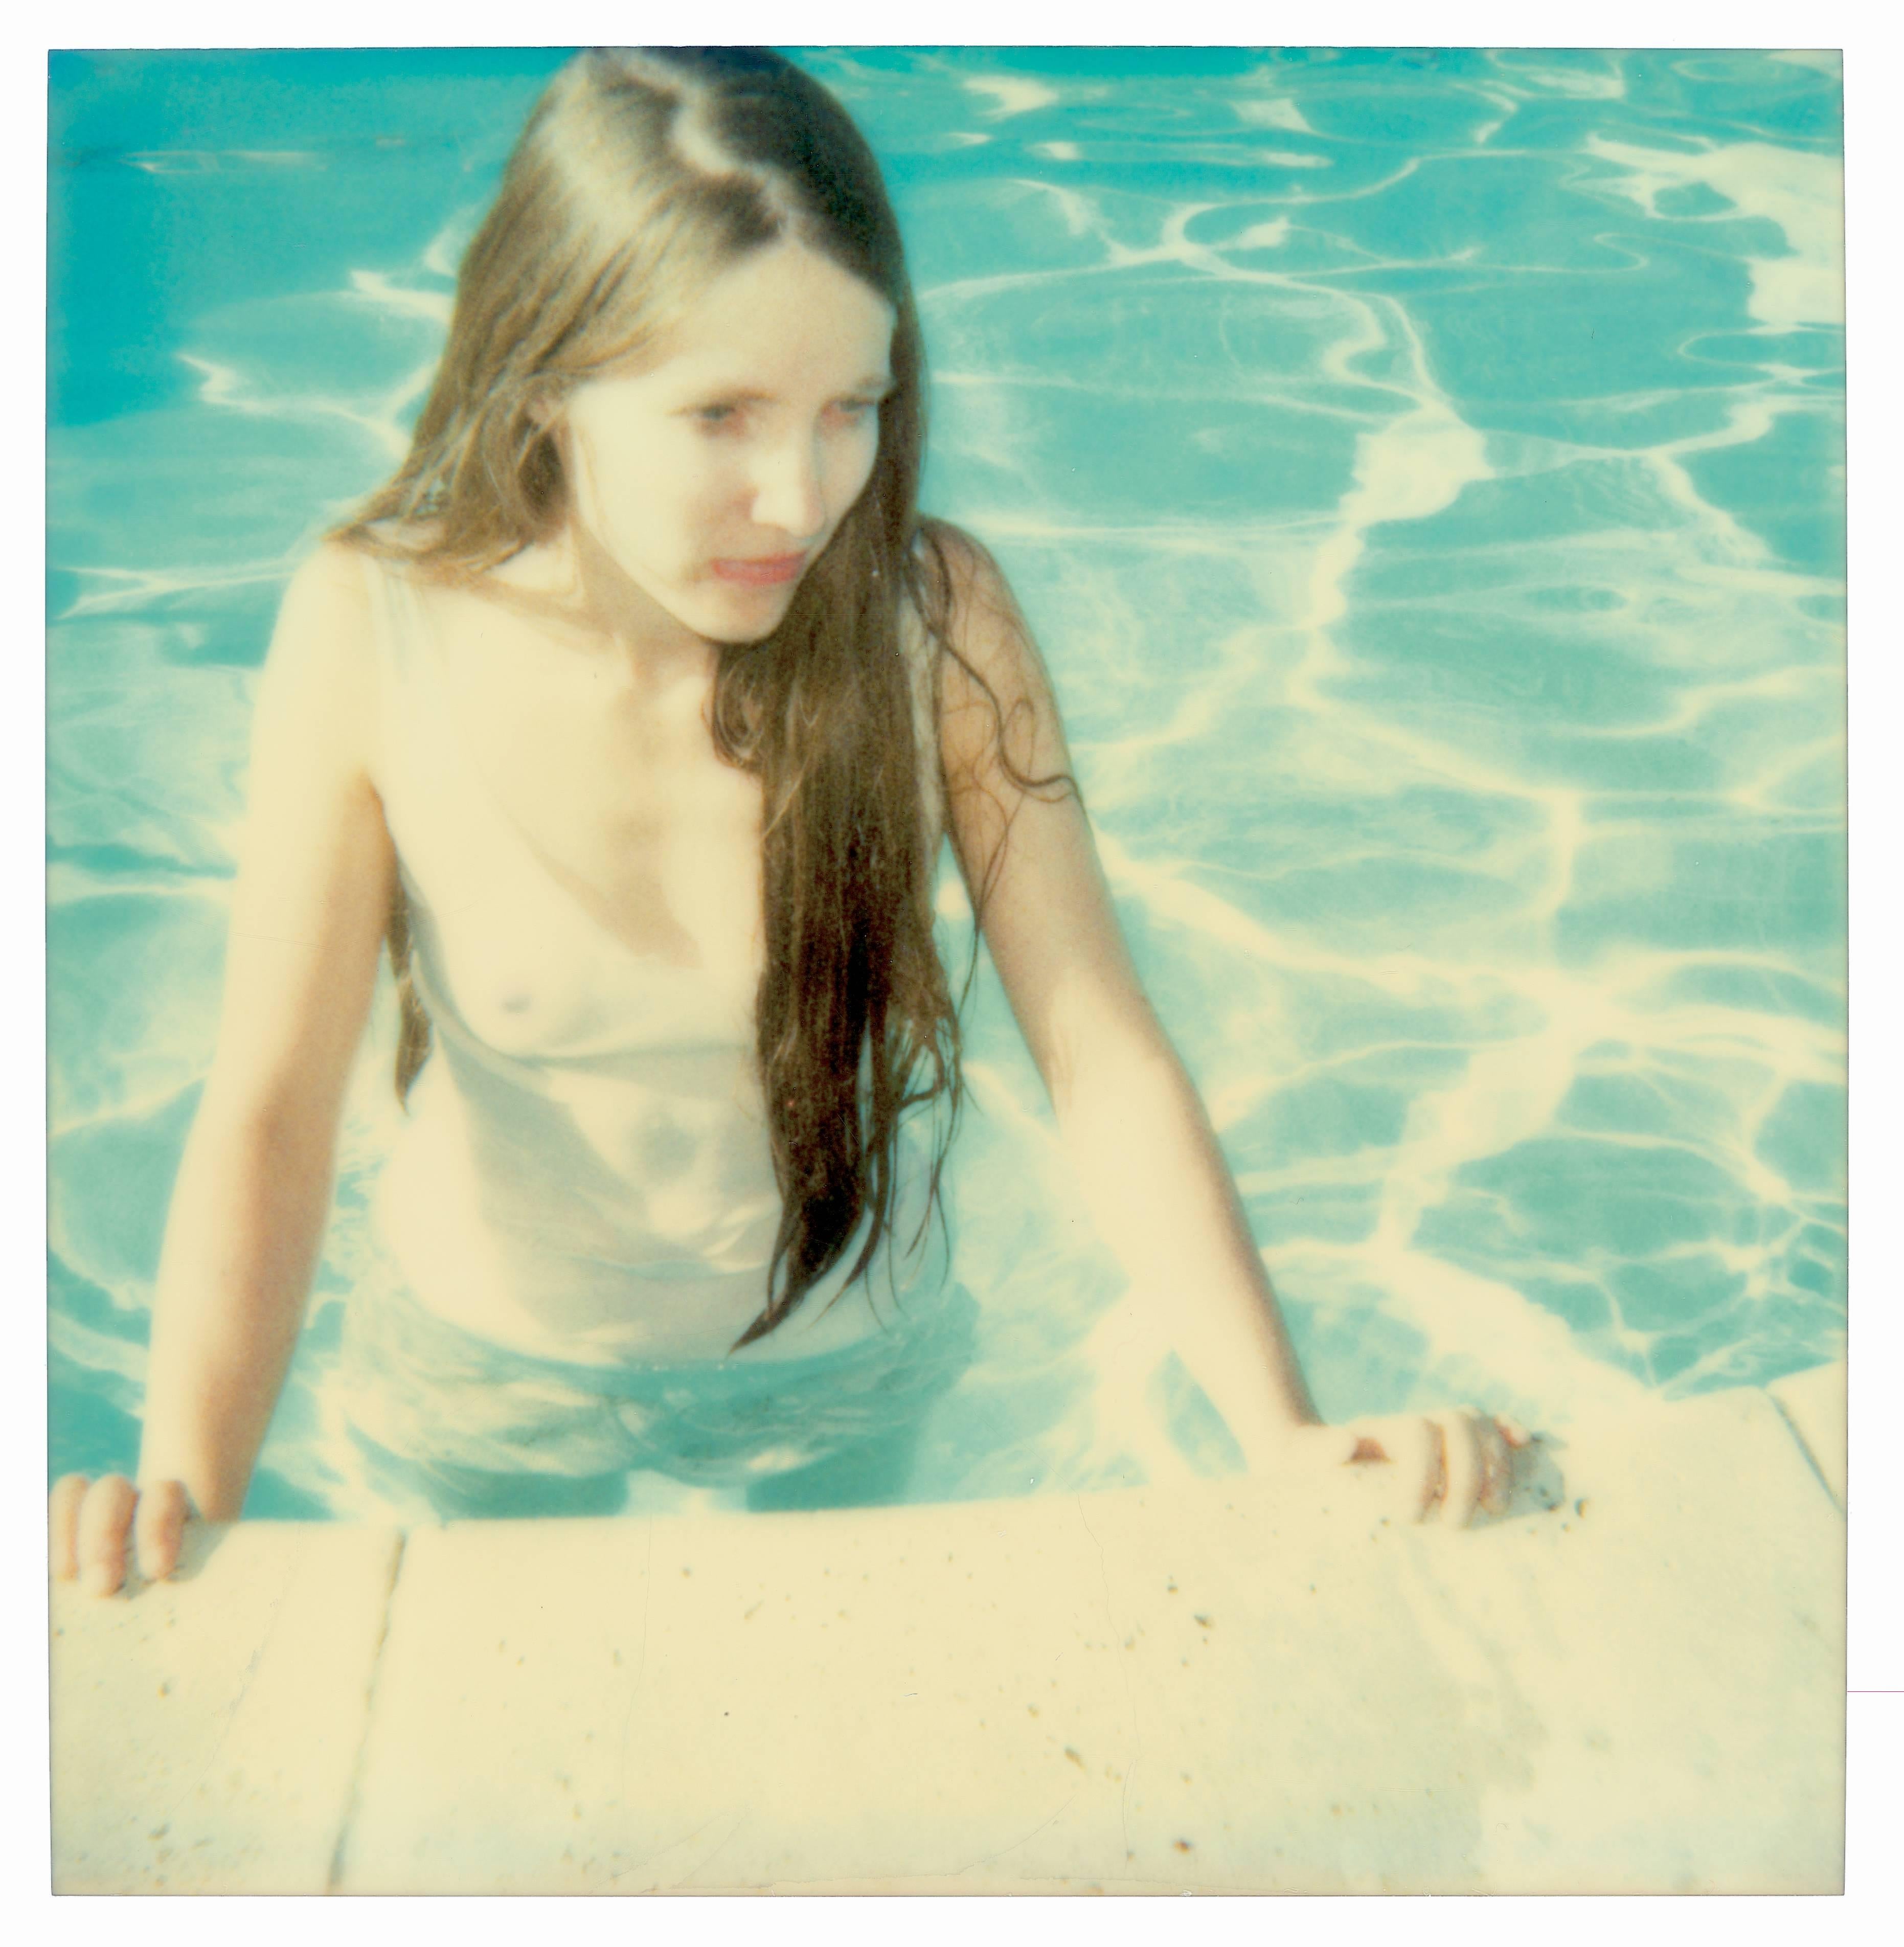 Stefanie Schneider Color Photograph - Pool Side - not mounted - 21st Century, Polaroid, Figurative Photograph, Woman